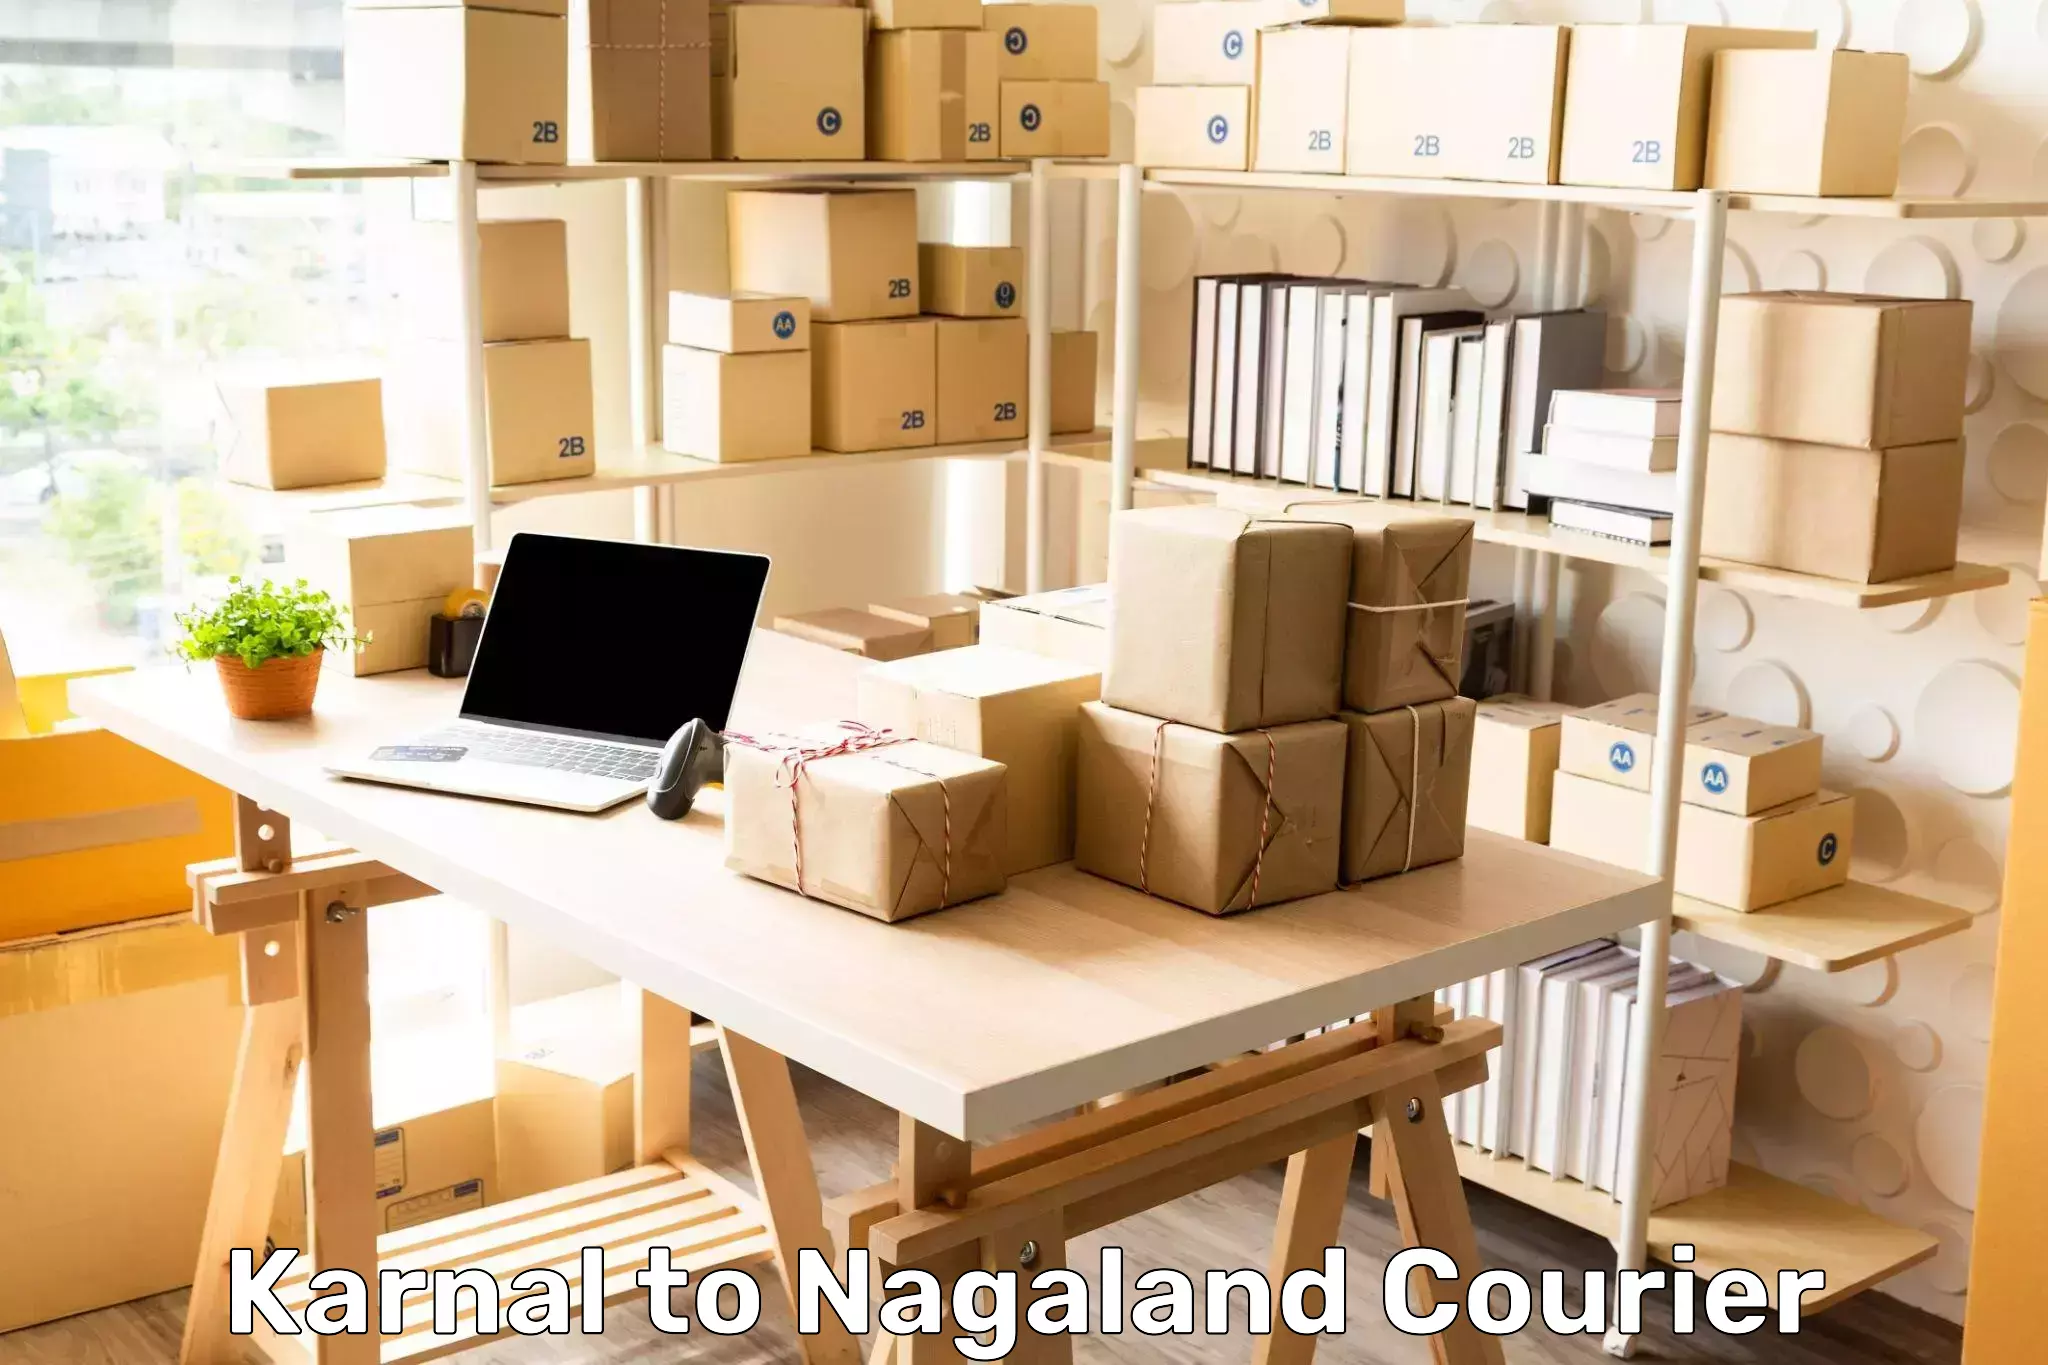 Global courier networks Karnal to Nagaland